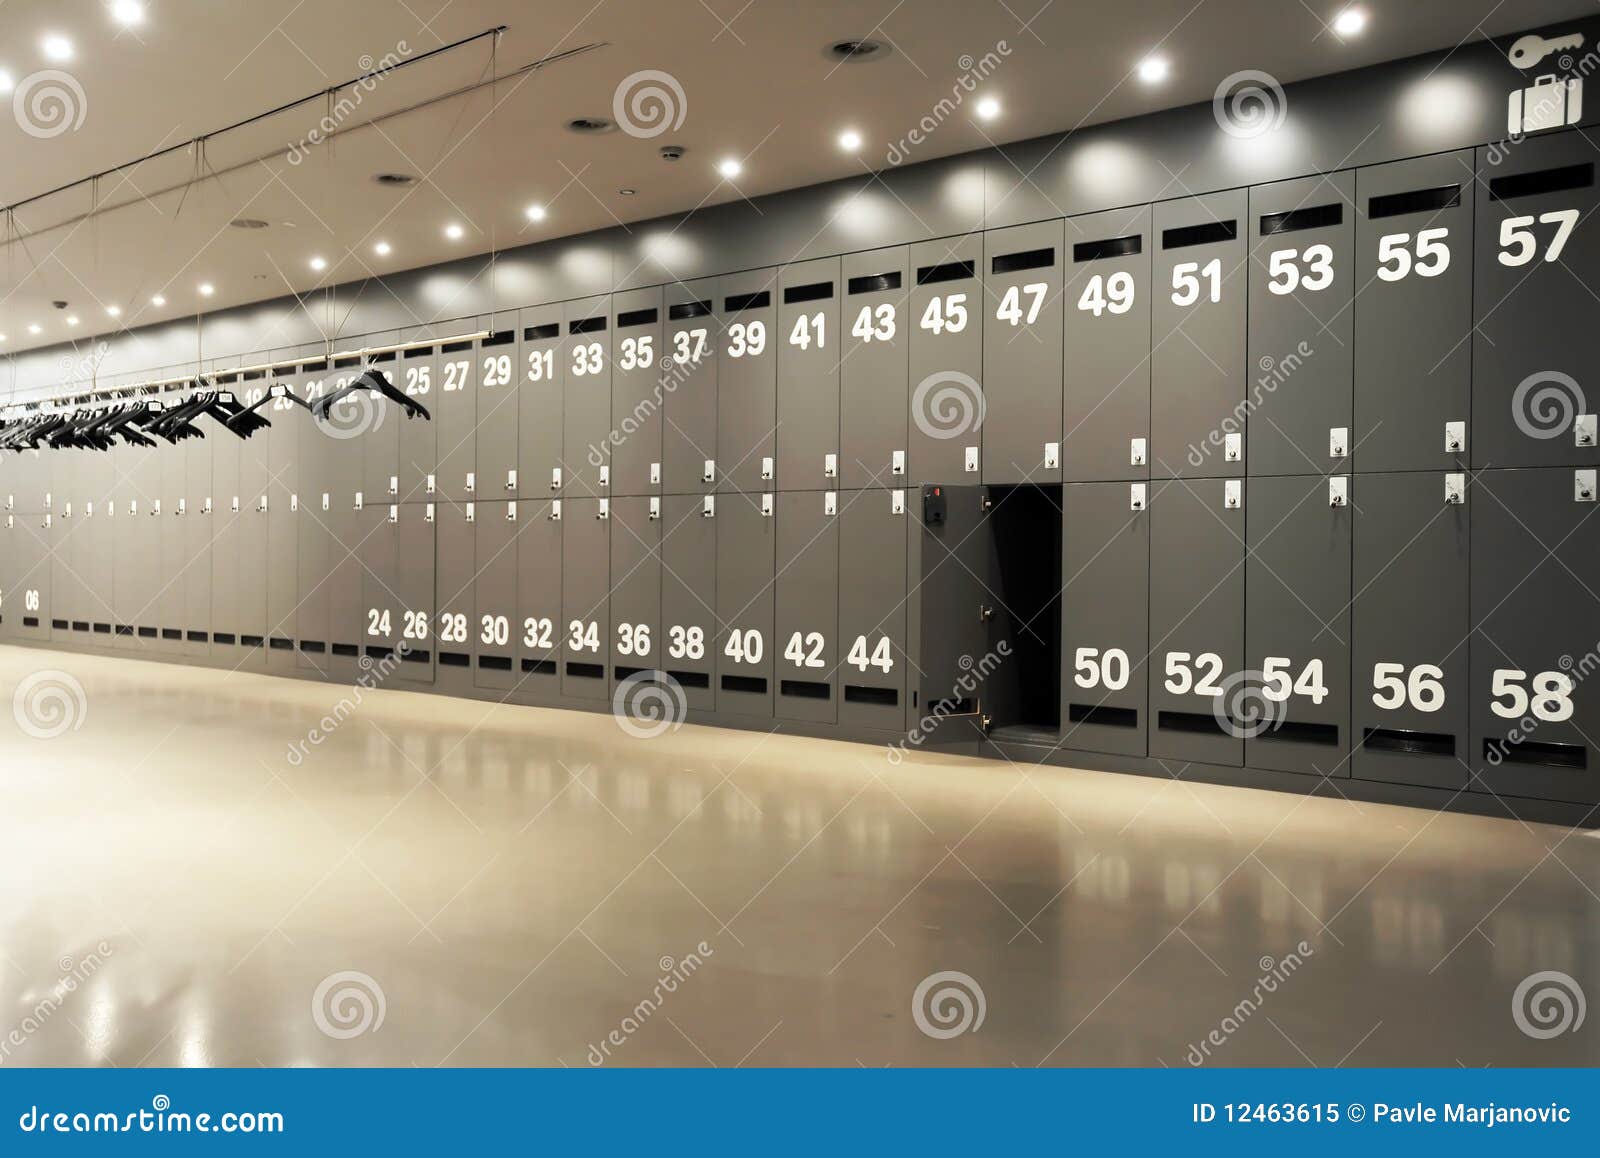 Royalty Free Stock Photo: Modern locker room